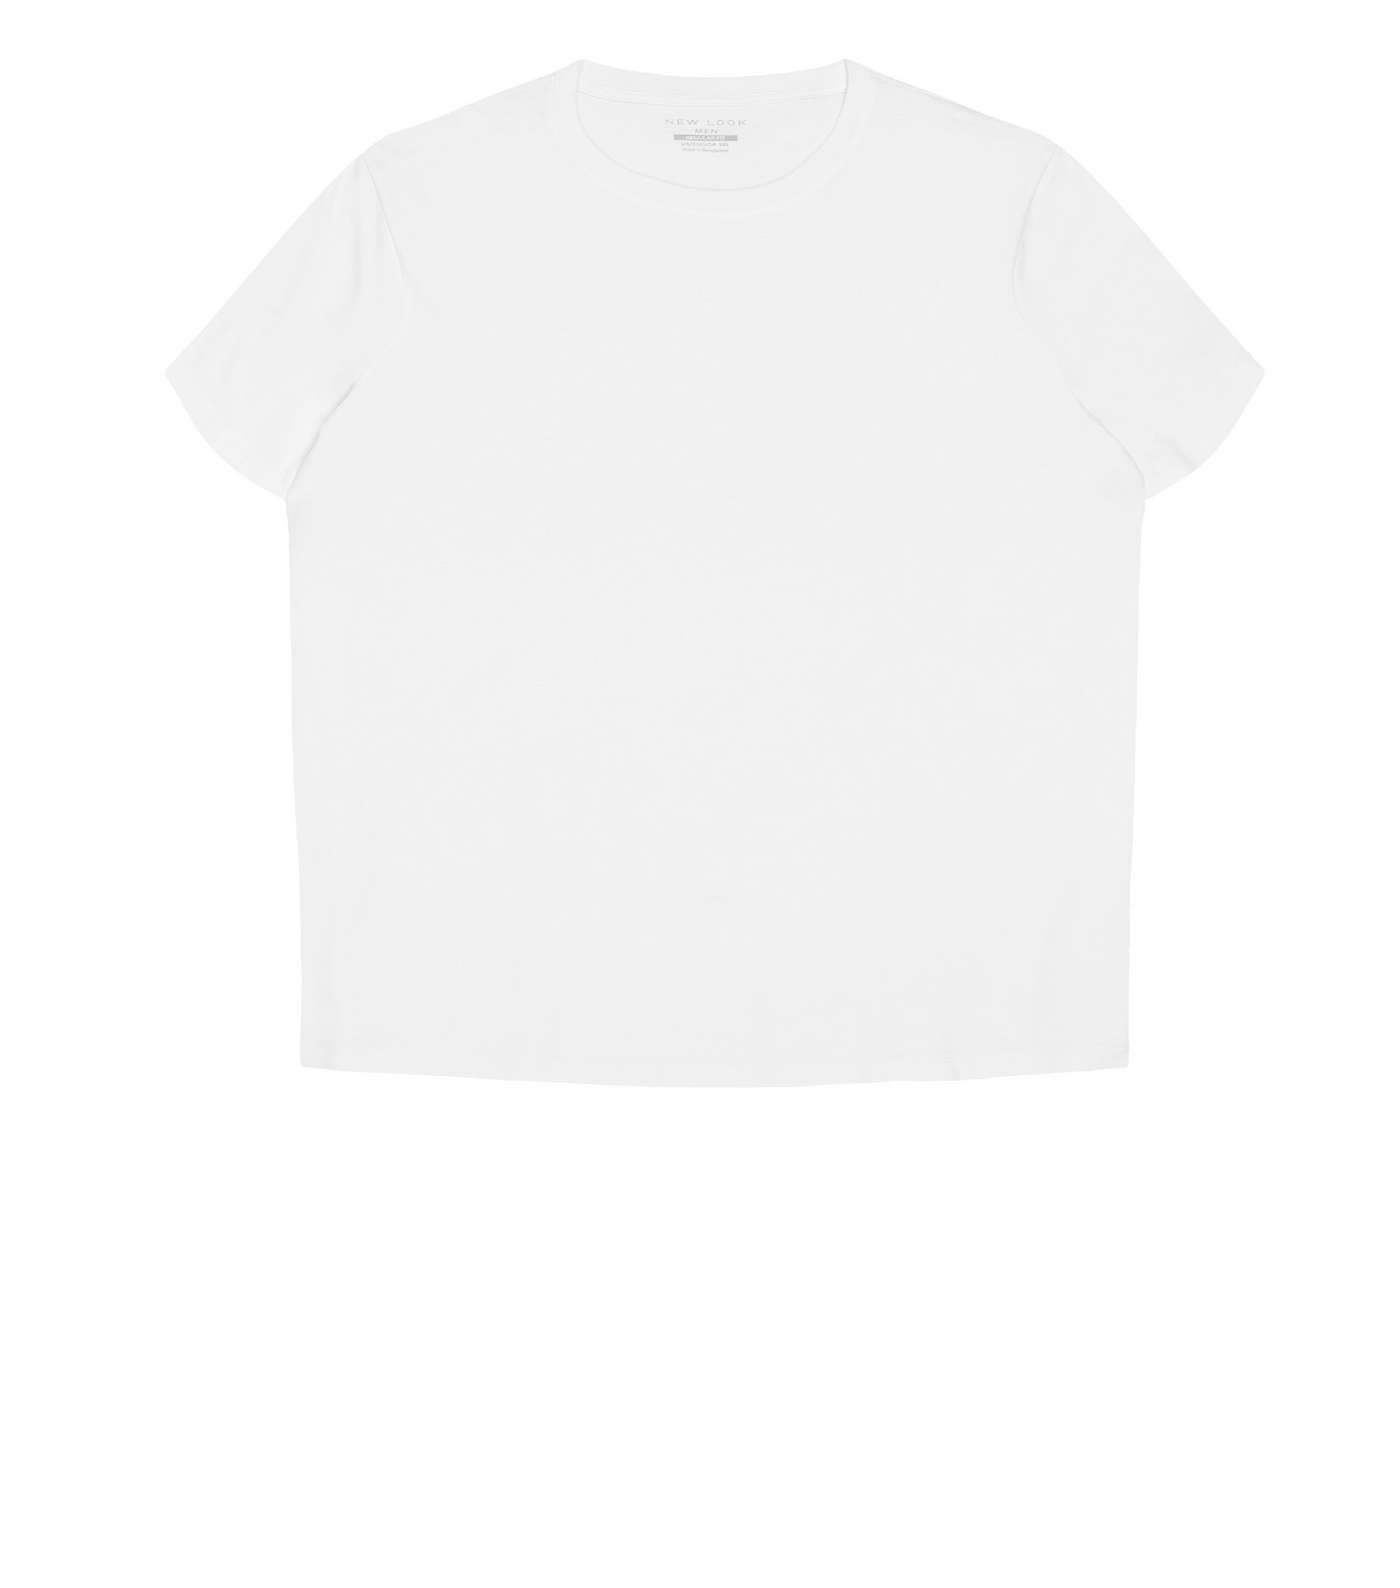 Plus Size White Crew Neck T-Shirt Image 4